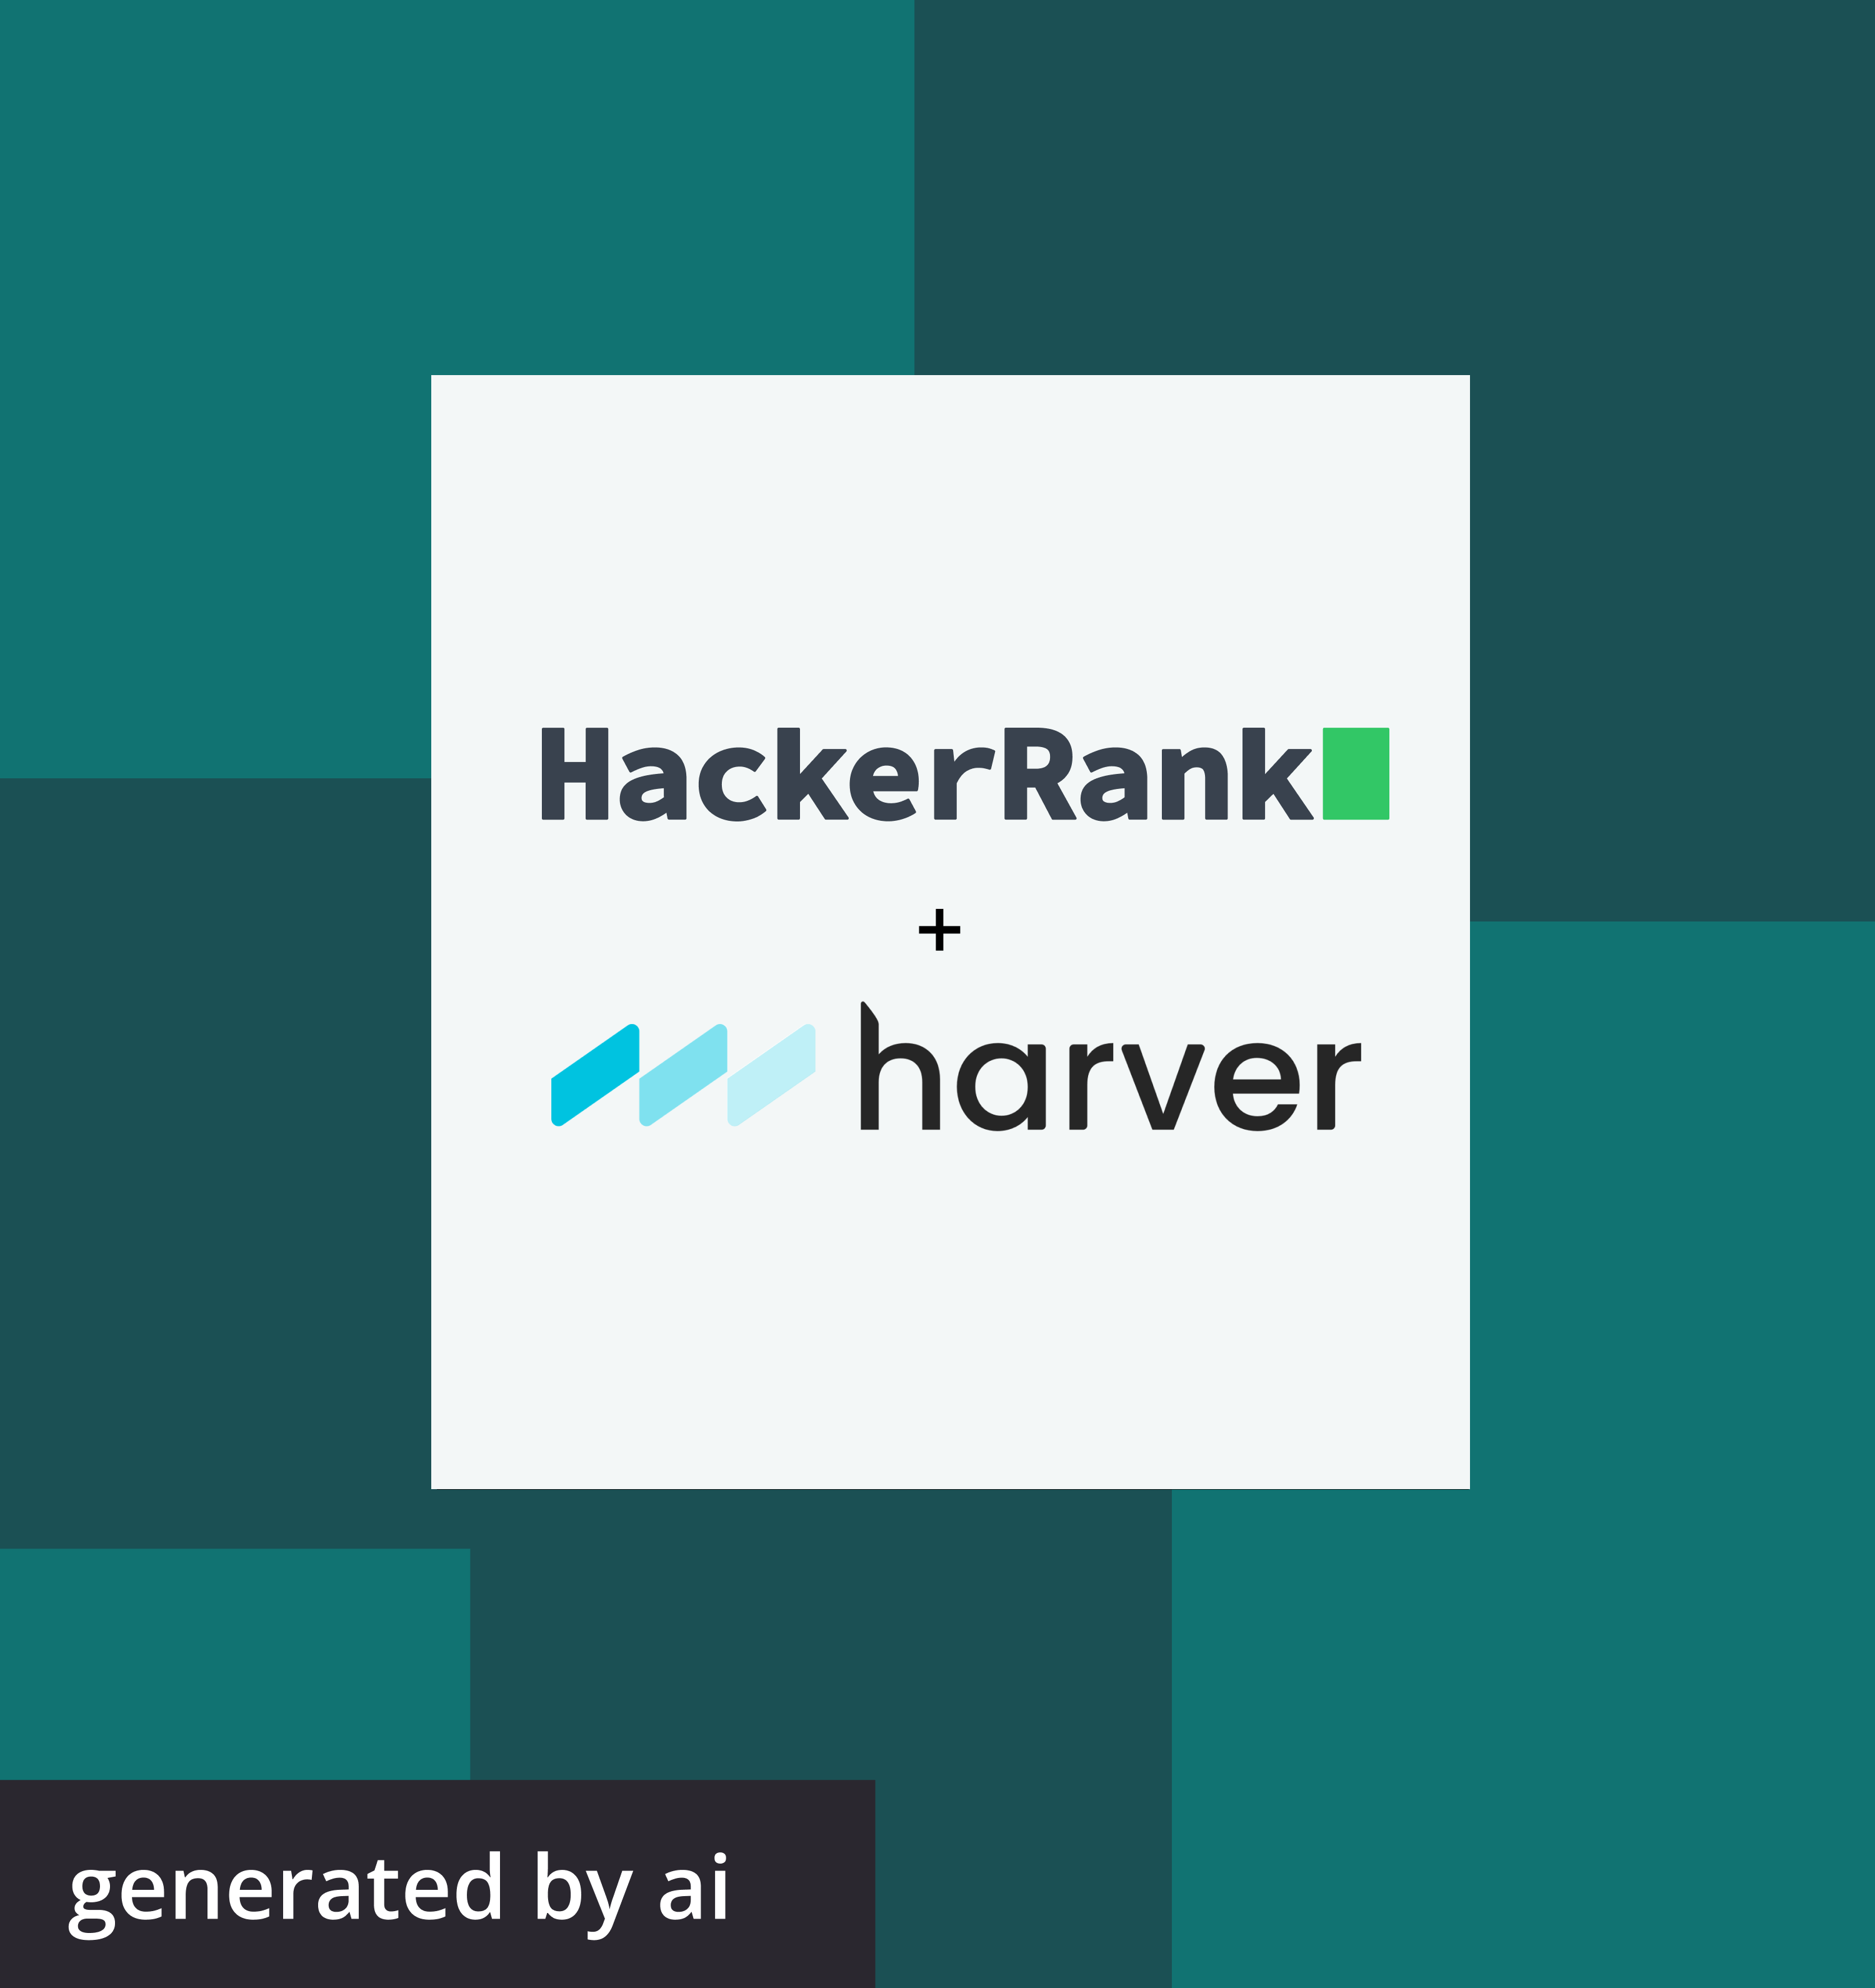 HackerRank and Harver partnership announcement